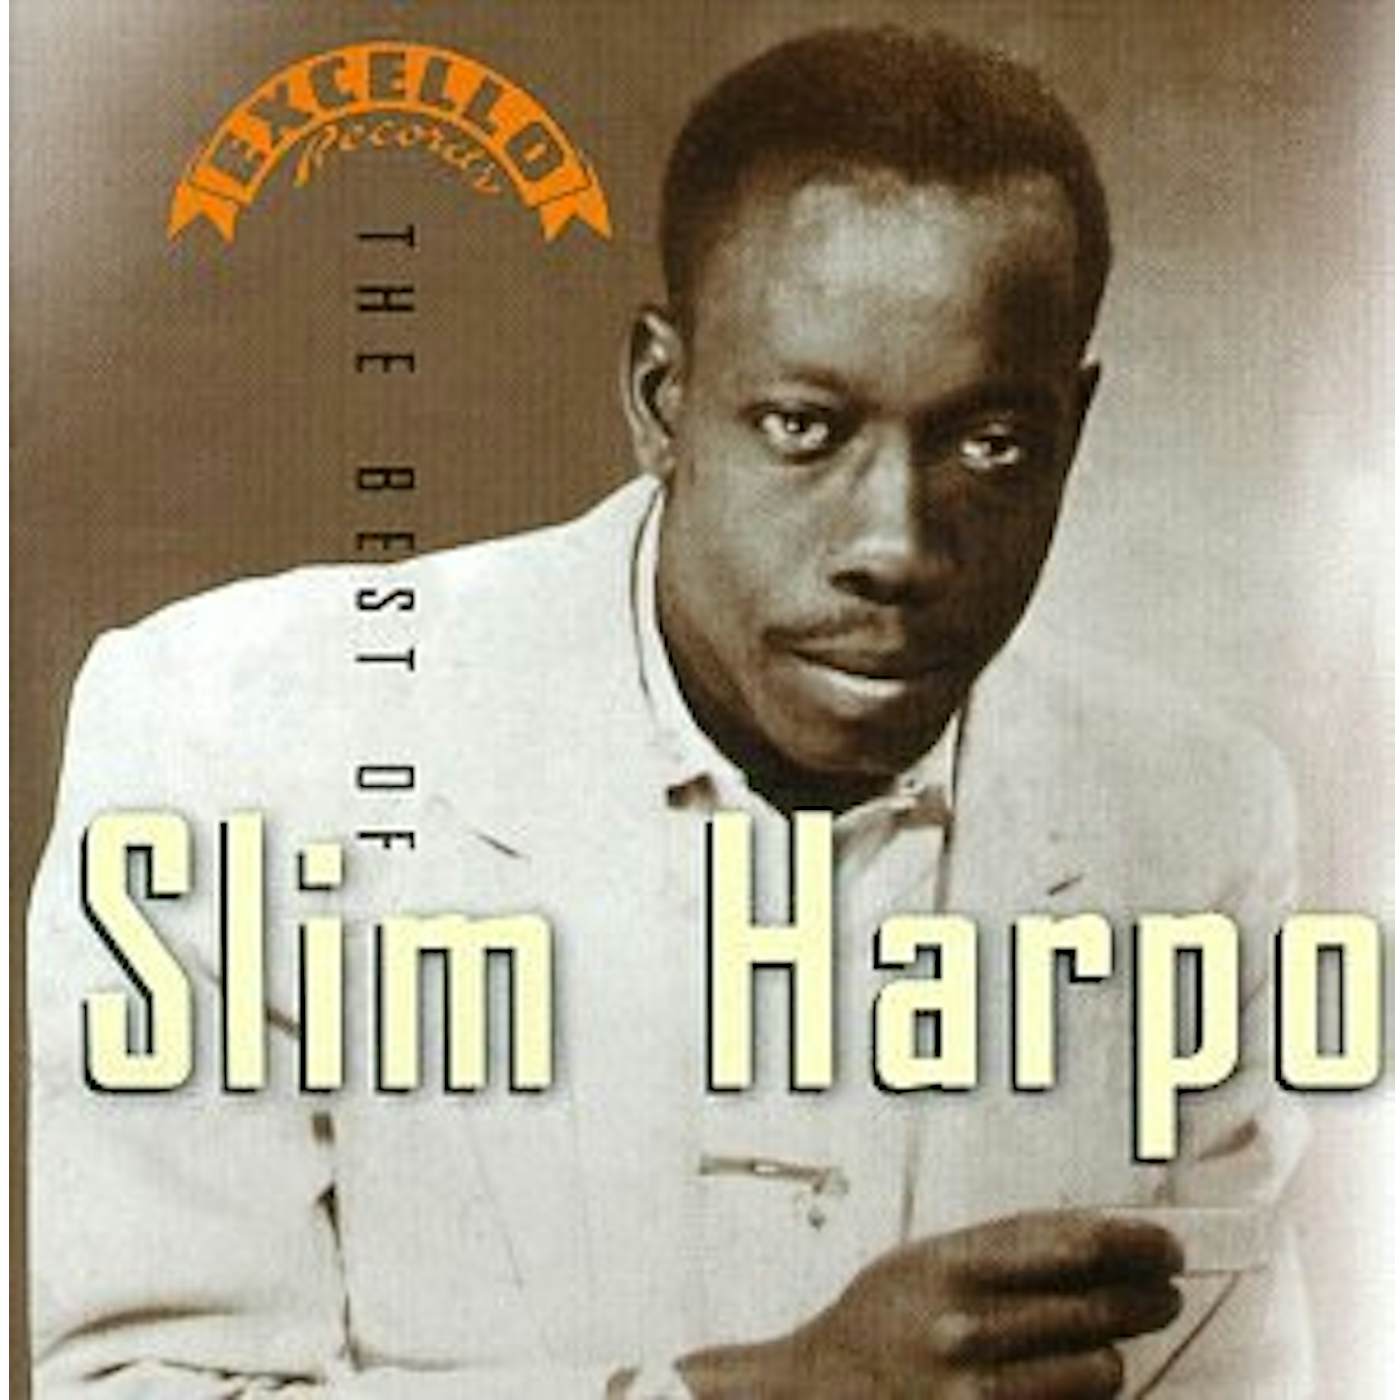 Slim Harpo BEST OF CD